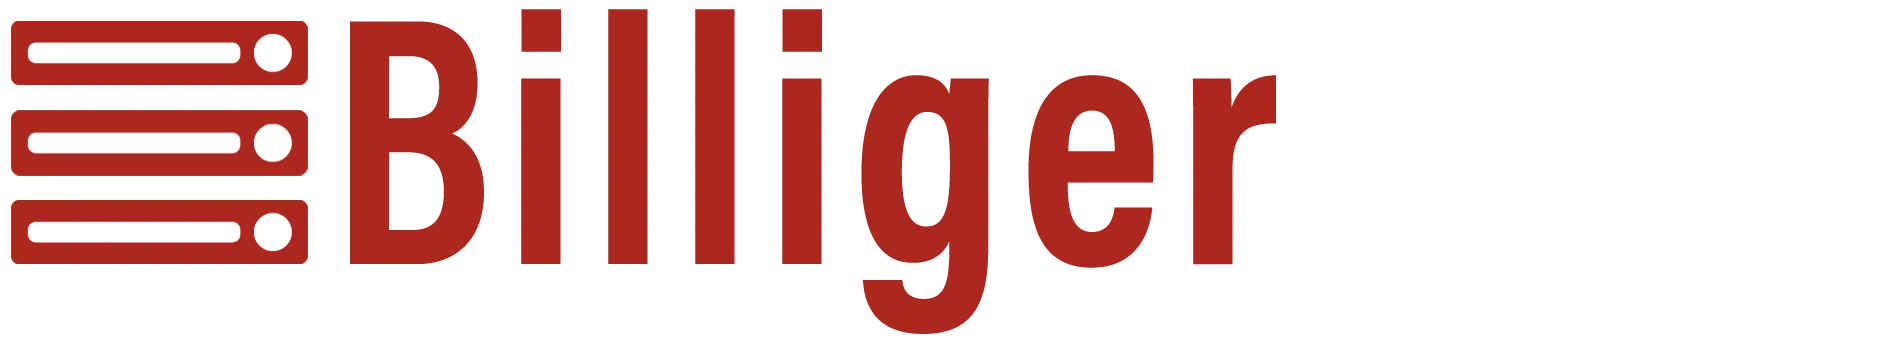 billigerhost logo